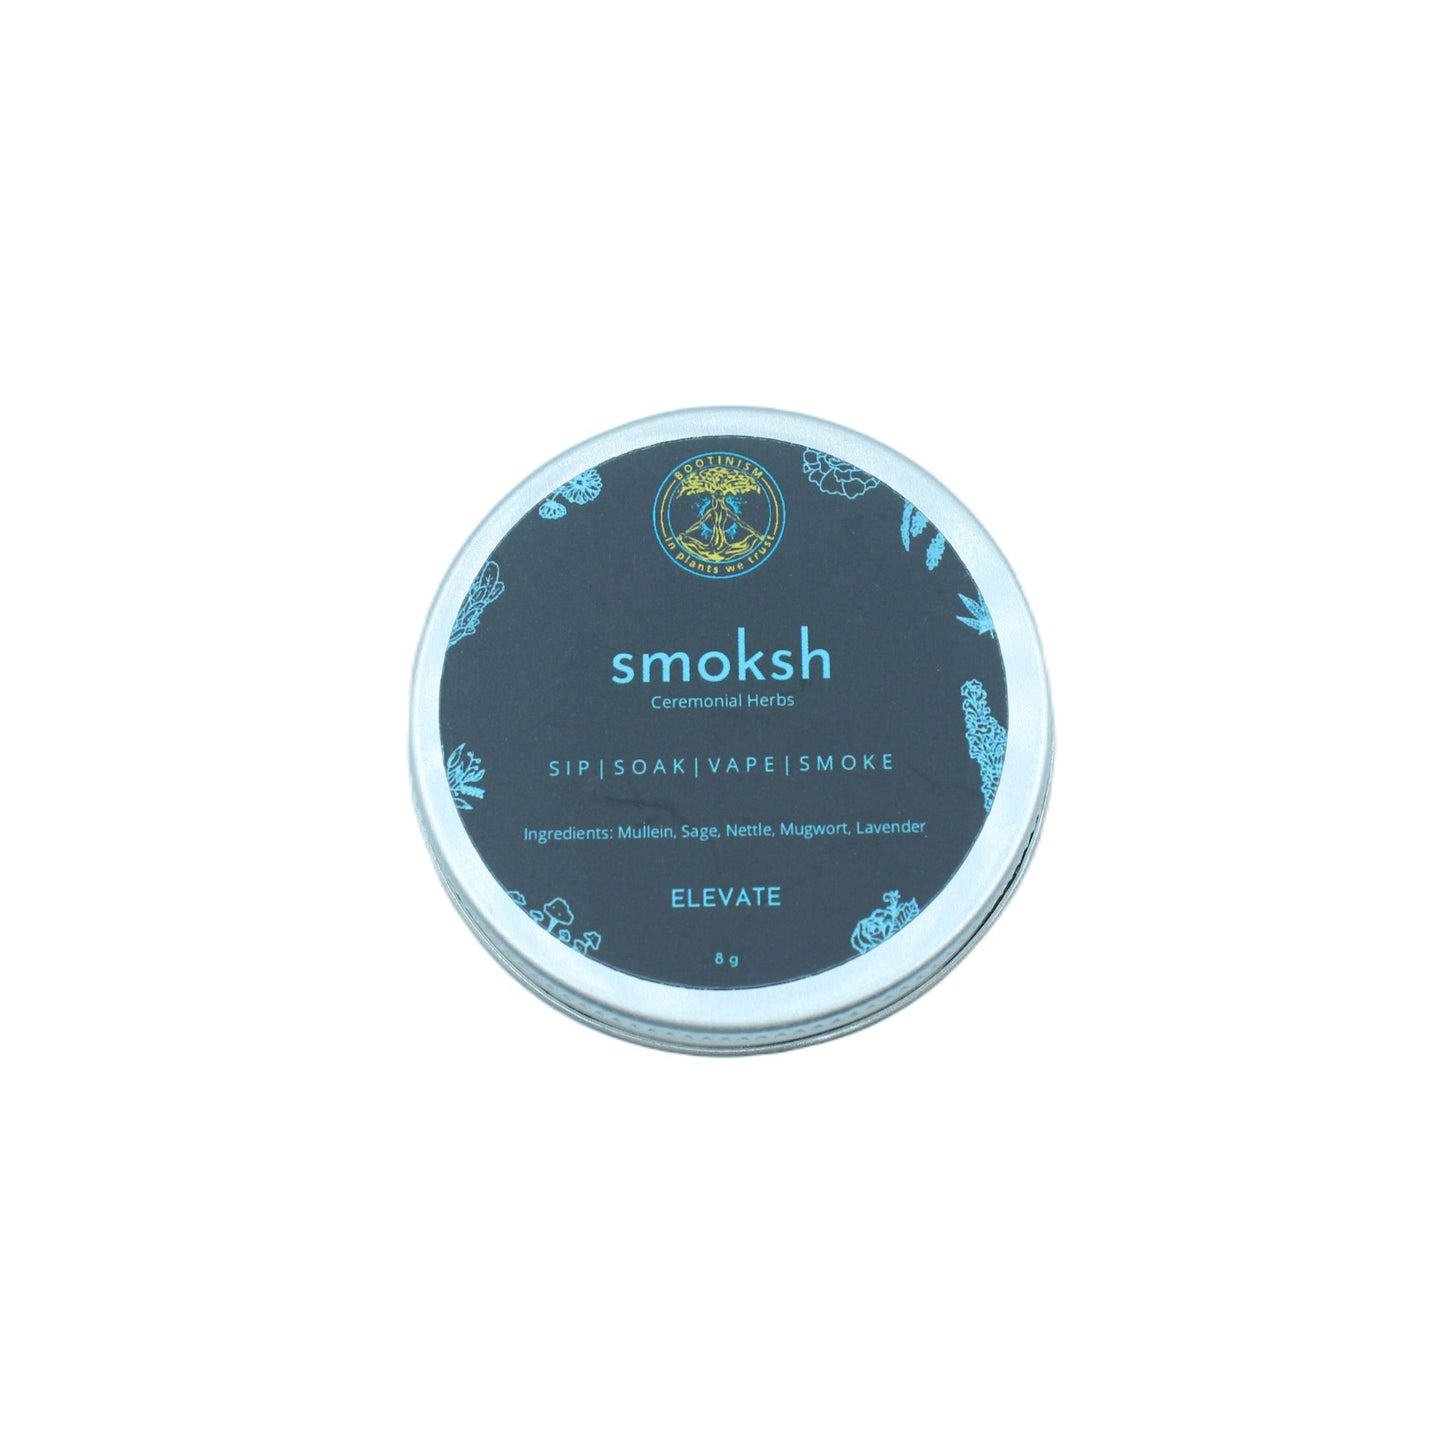 SMOKSH ELEVATE Herbal Smoking Blend 8g  HighJack India